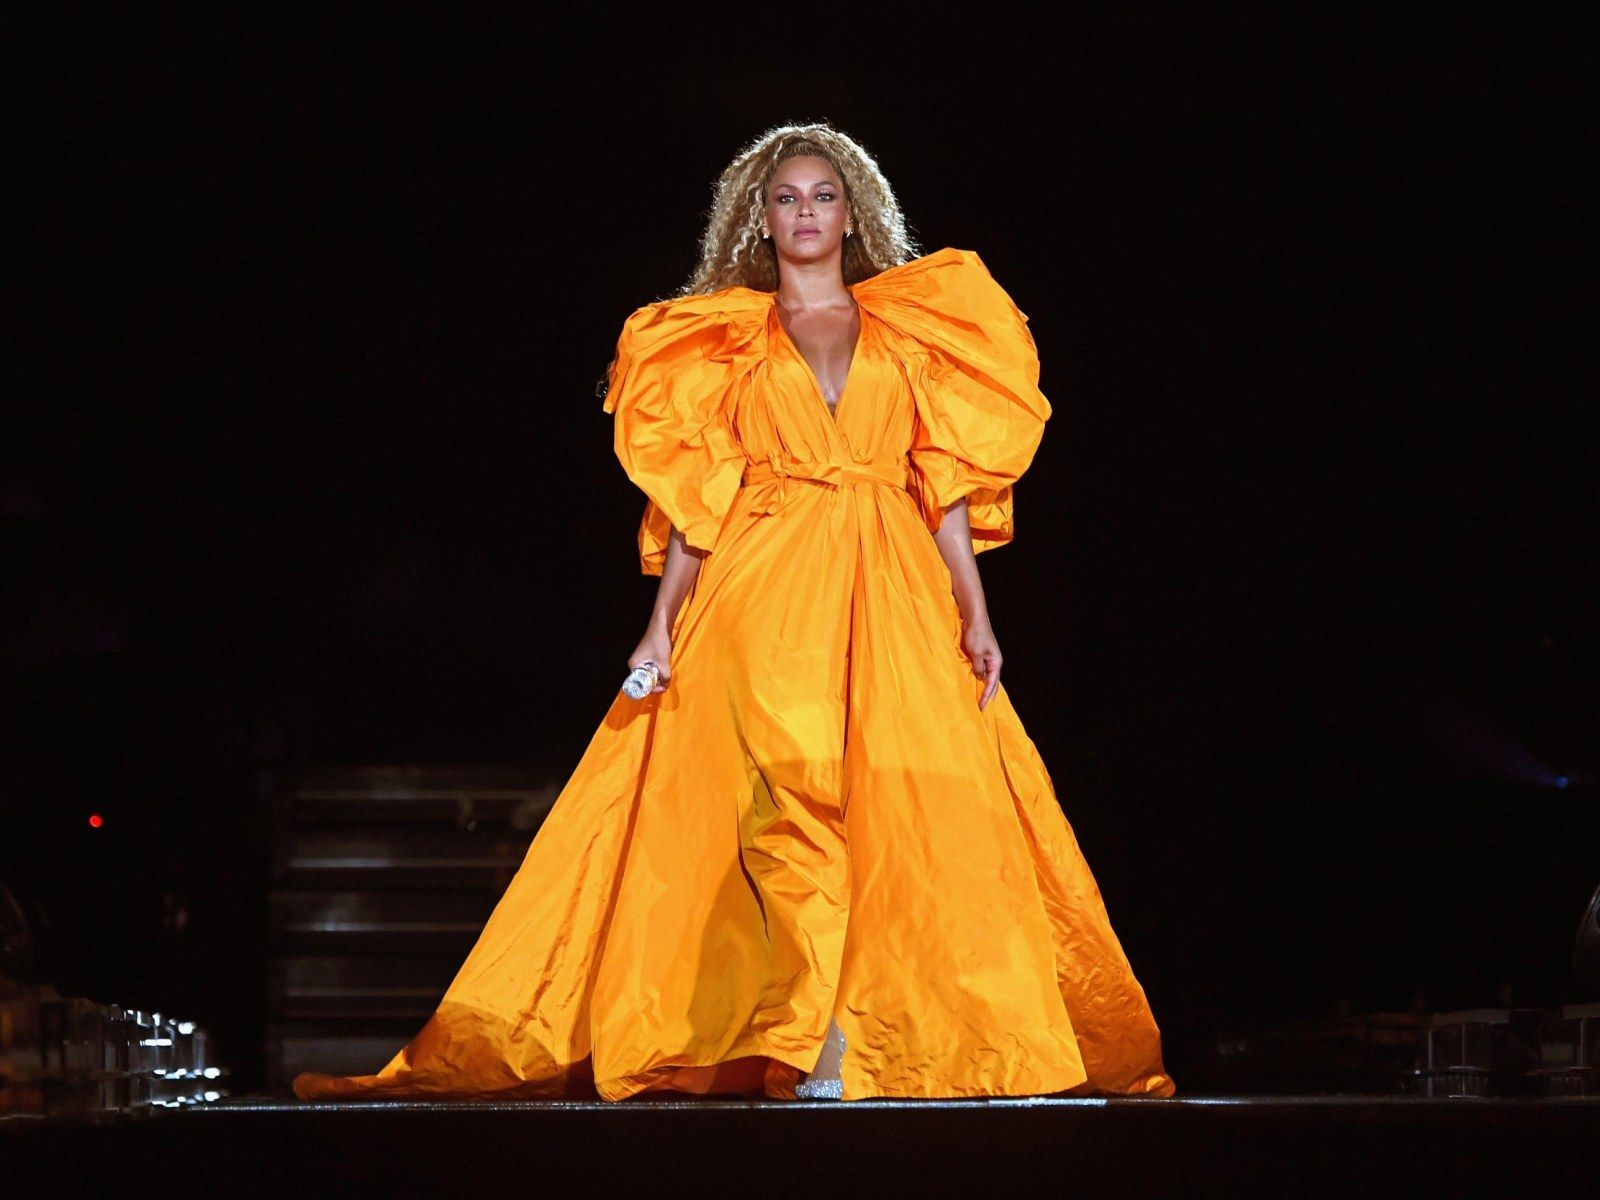 How to Stream Beyoncé's 'Lemonade' Album: Is It On Apple Music, Spotify, Amazon?